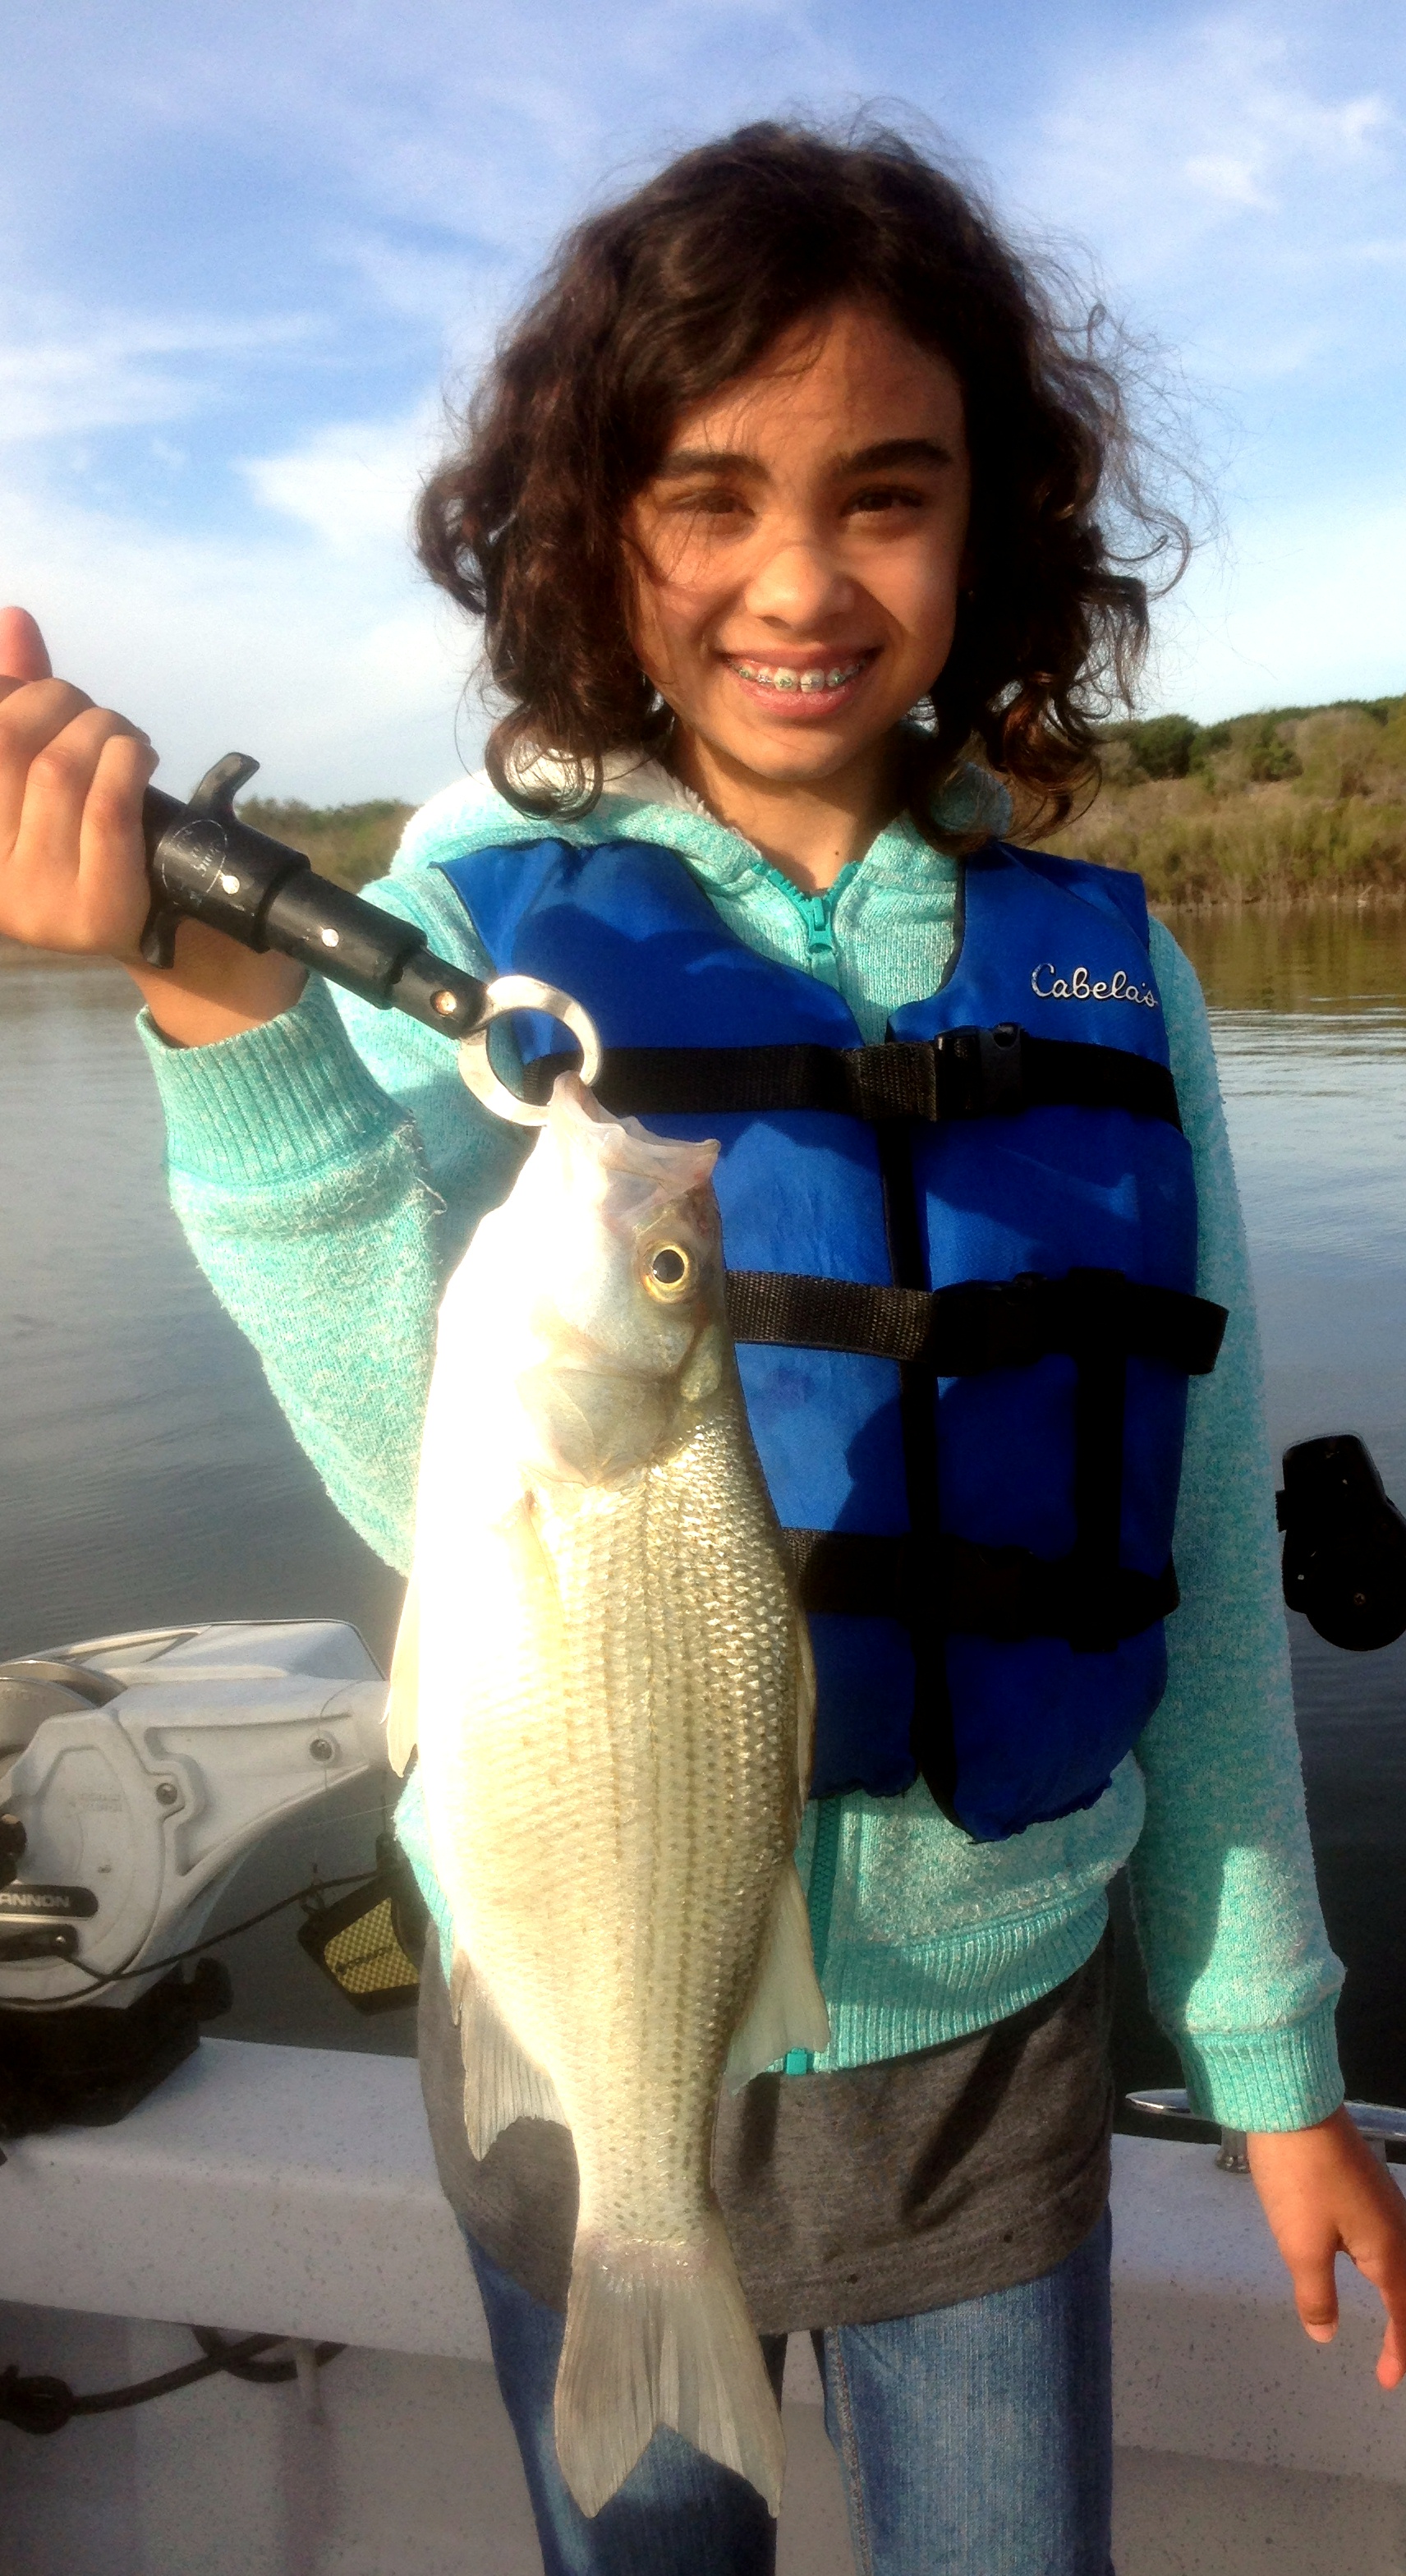 New Lake Record White Bass — 101 Fish, Spring Break Trip #5